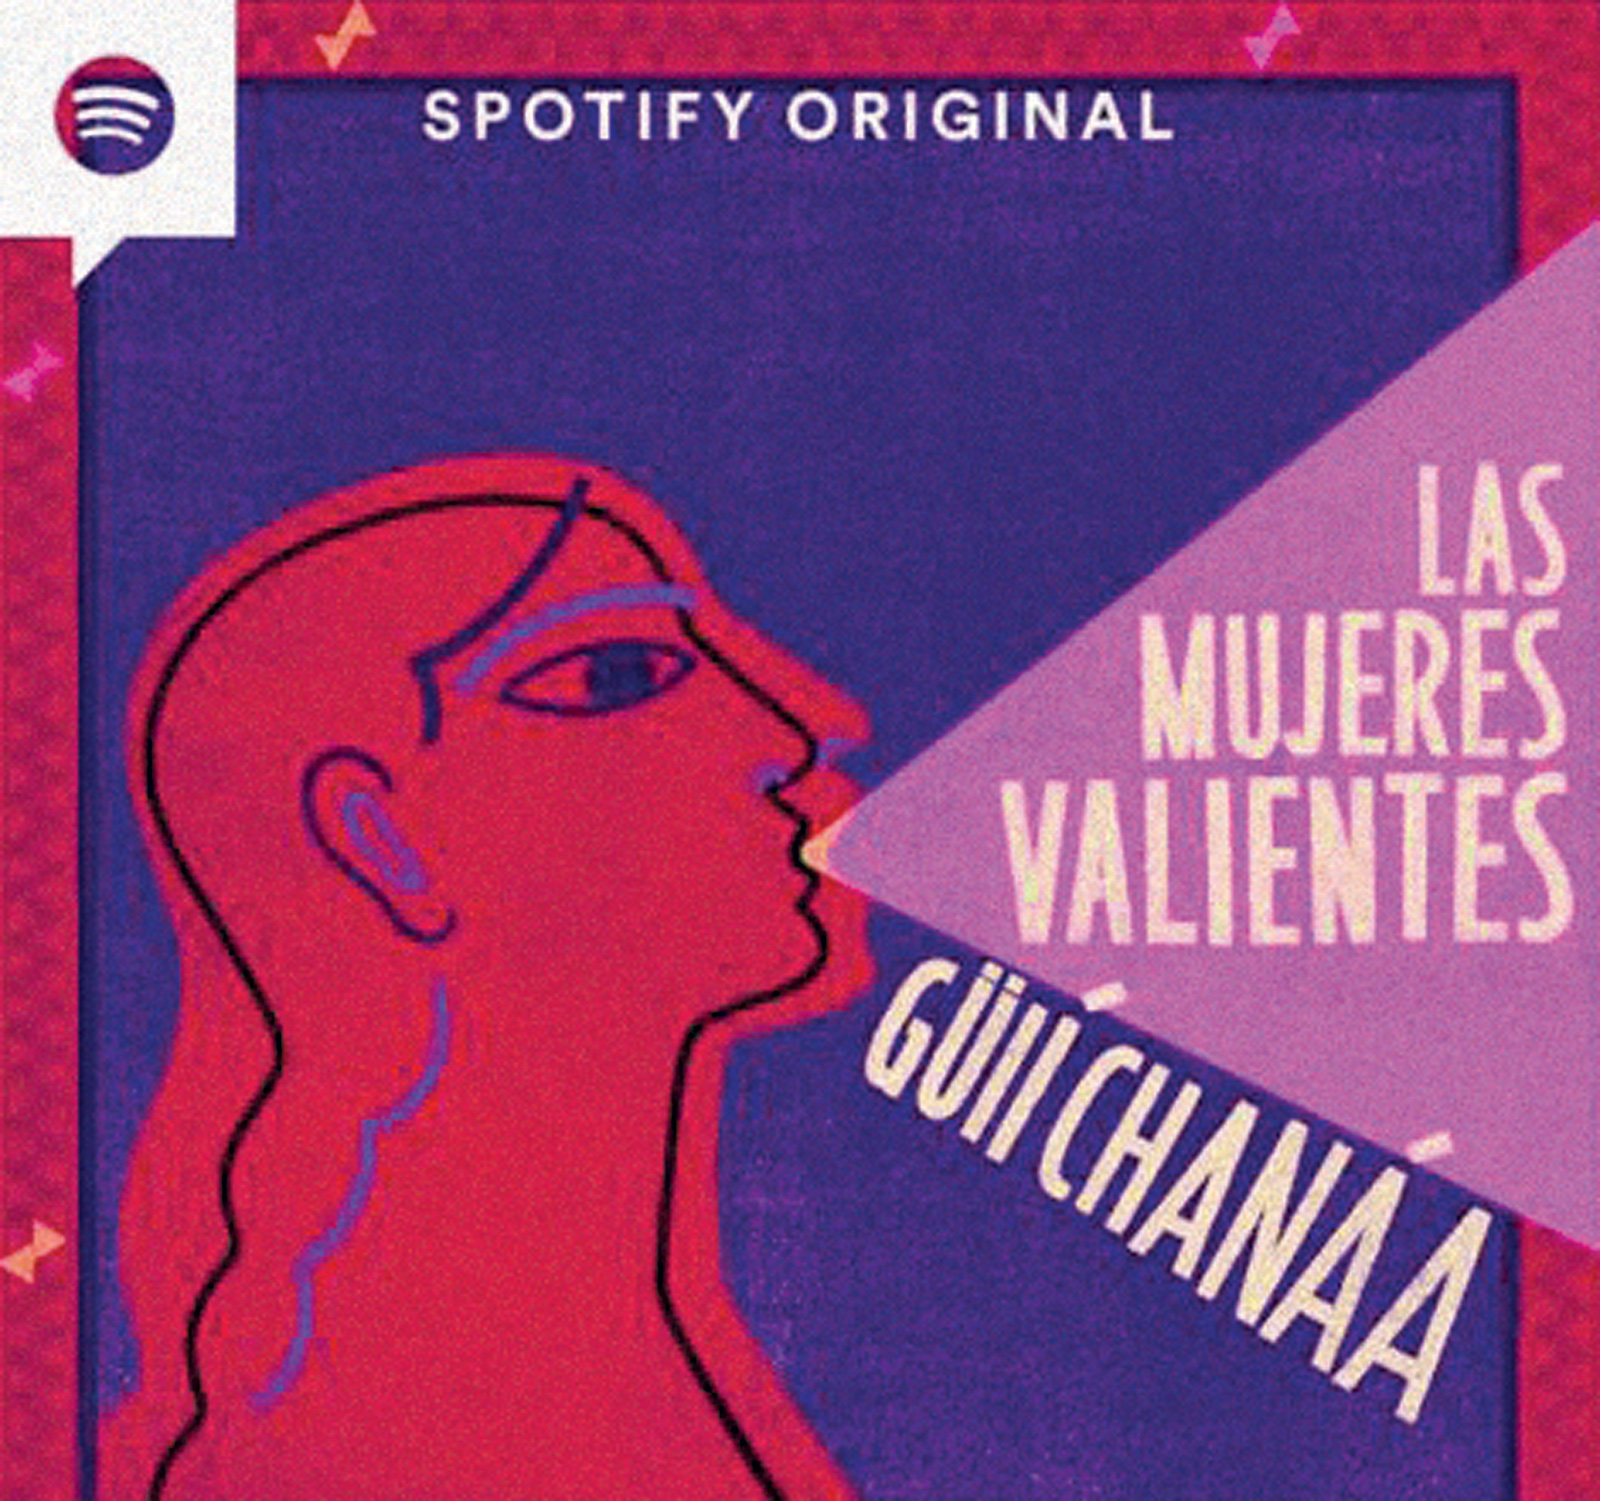 *Las mujeres valientes: Guií Chanáa*, Spotify Studio, México, 2023